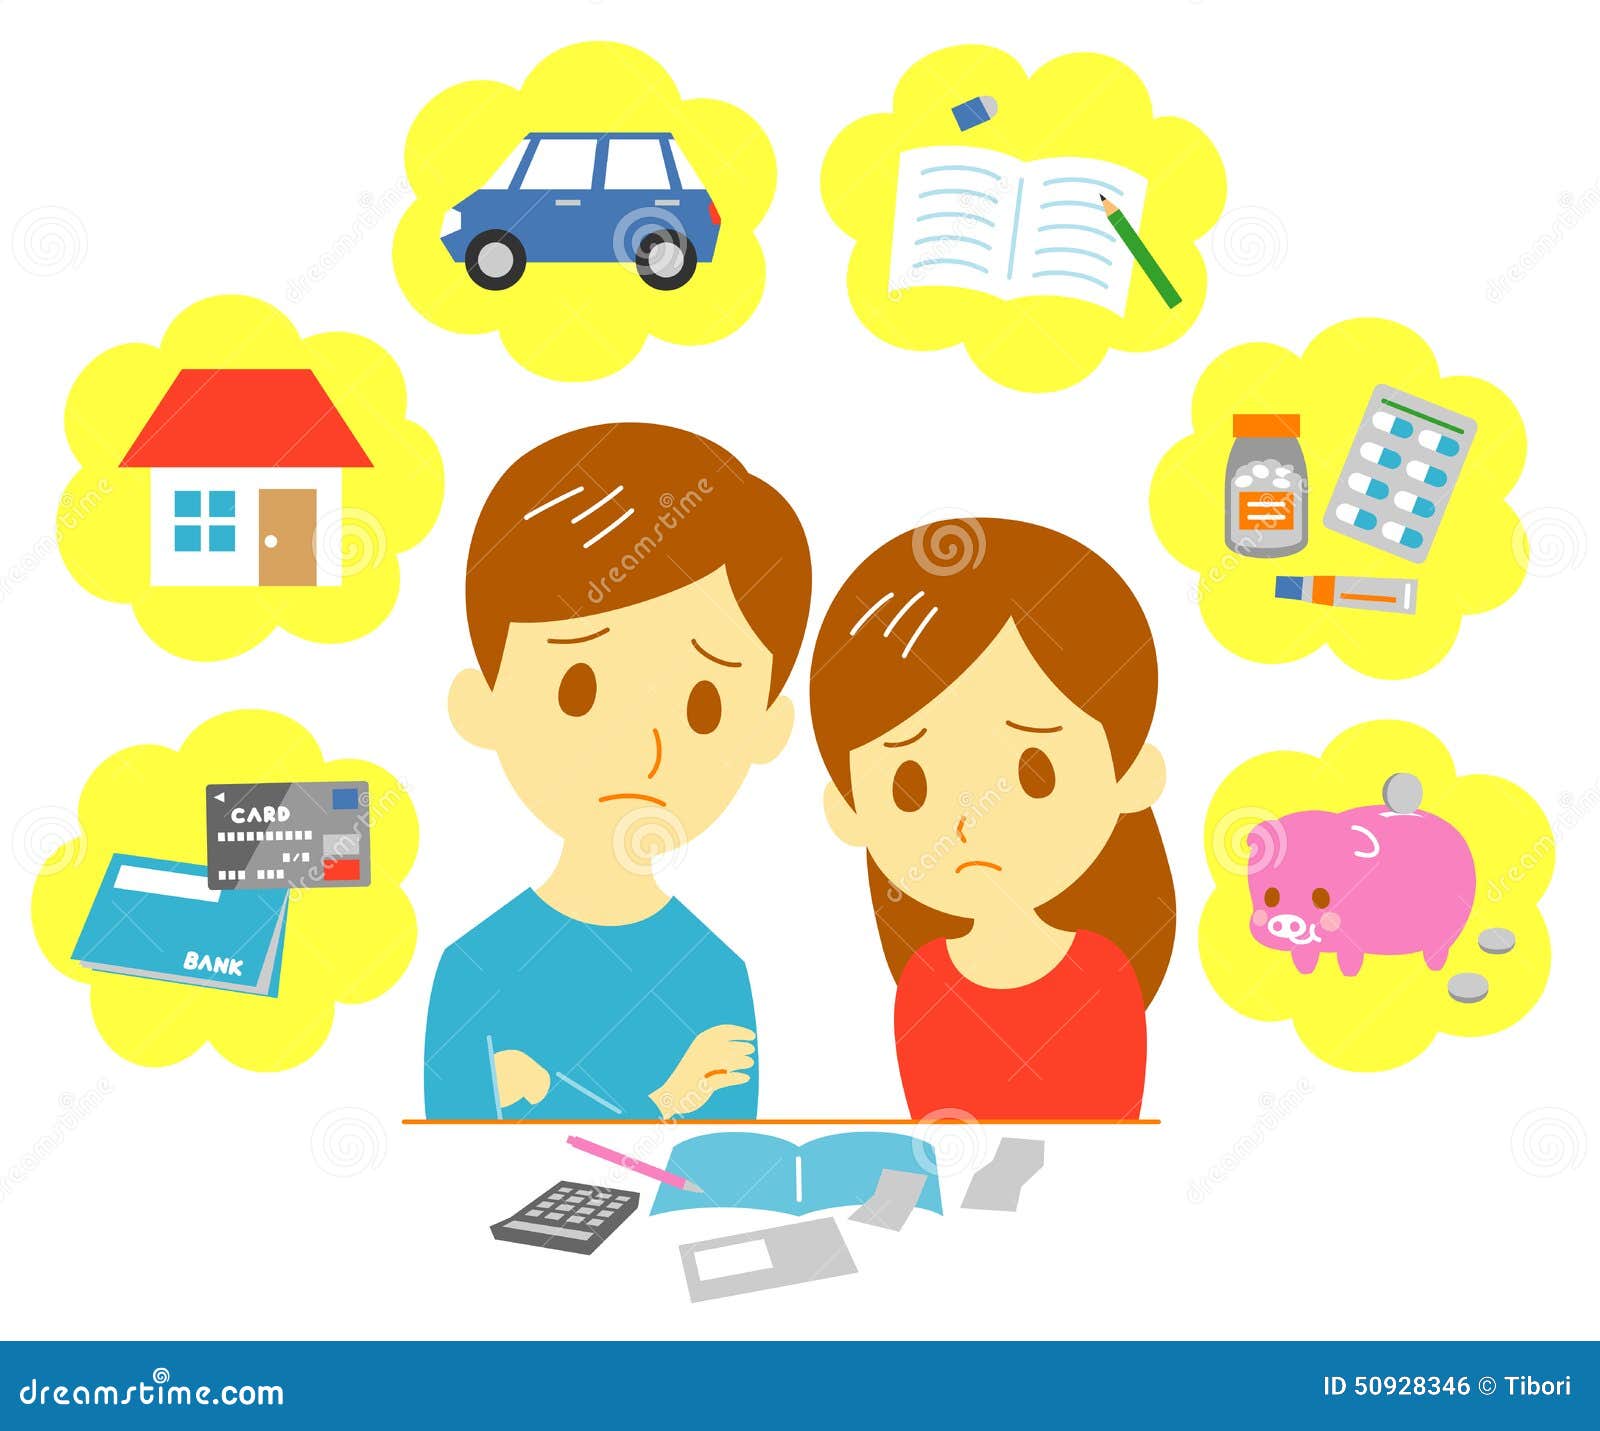 managing-family-finances-couple-file-50928346.jpg